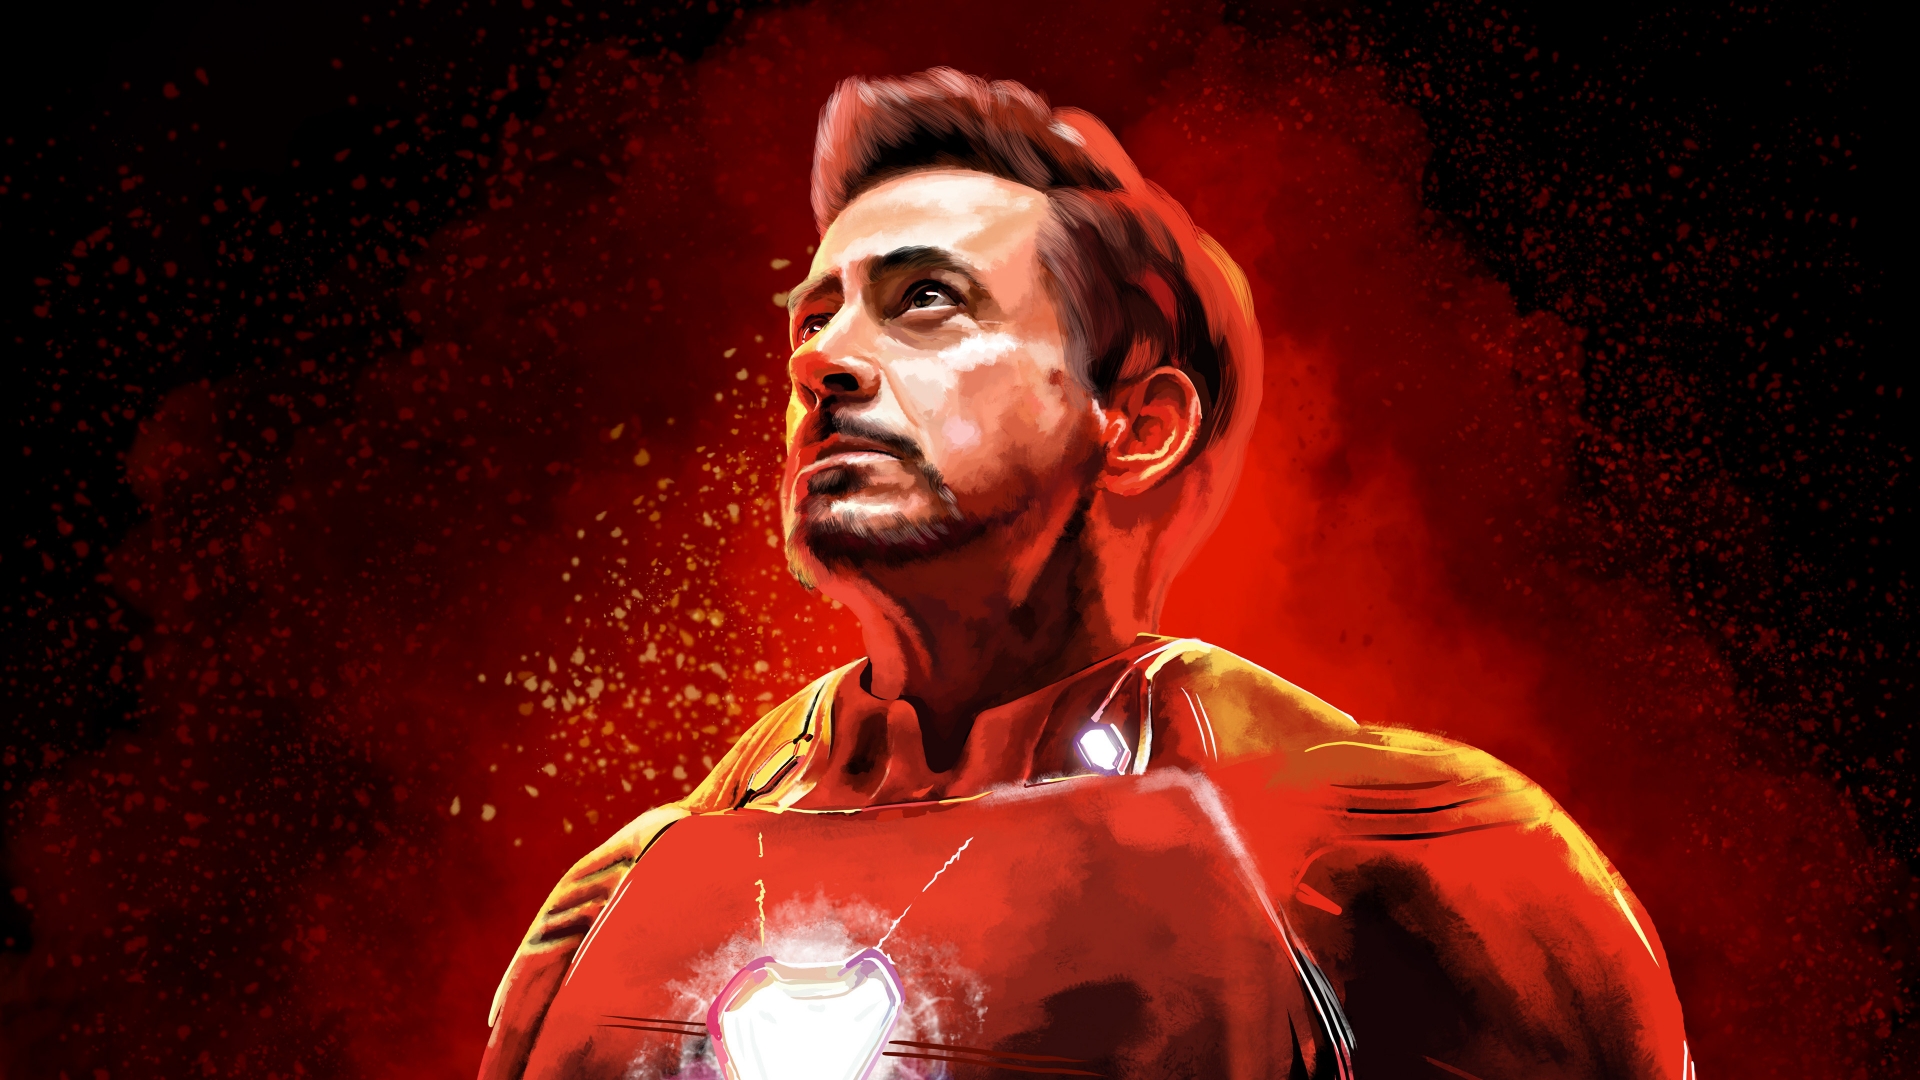 Robert Downey Jr as Iron Man Fanart Wallpaper 4k Ultra HD ID:4374